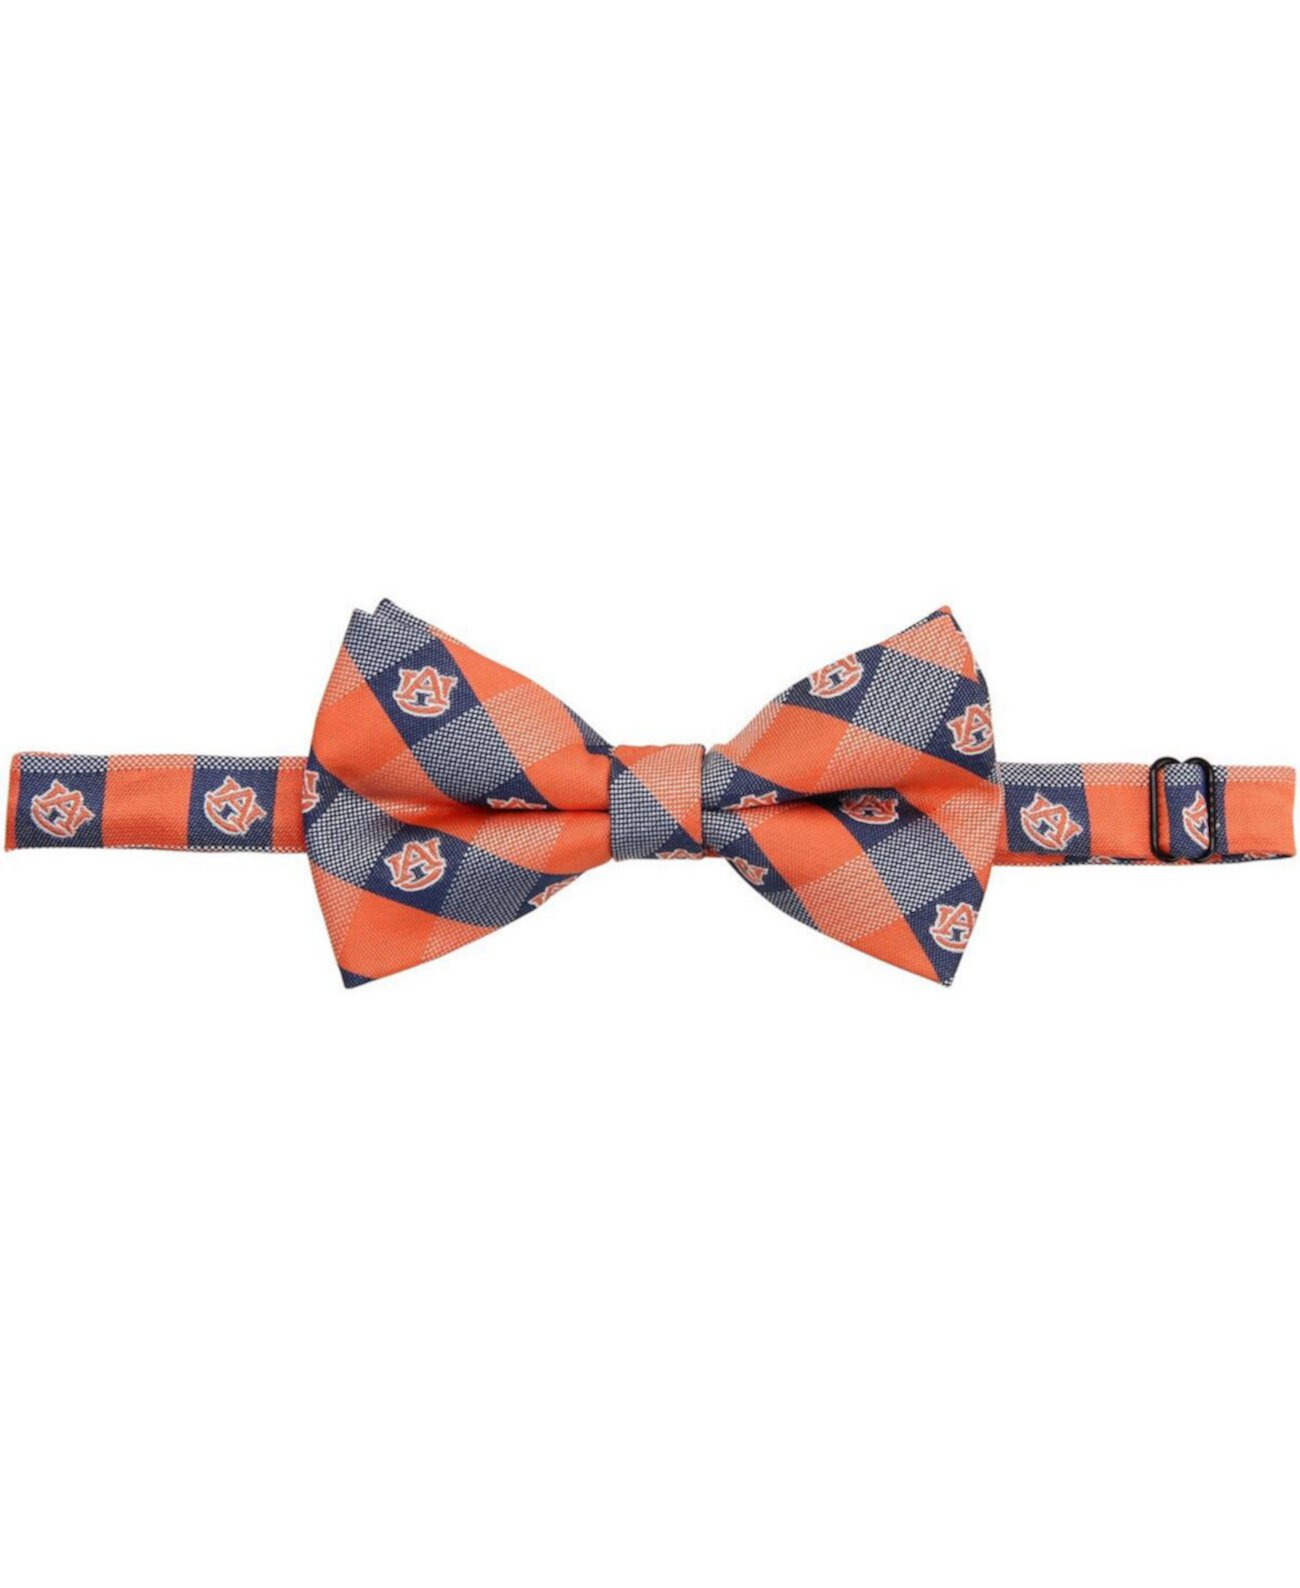 Auburn Tigers Check Bow Tie Lids